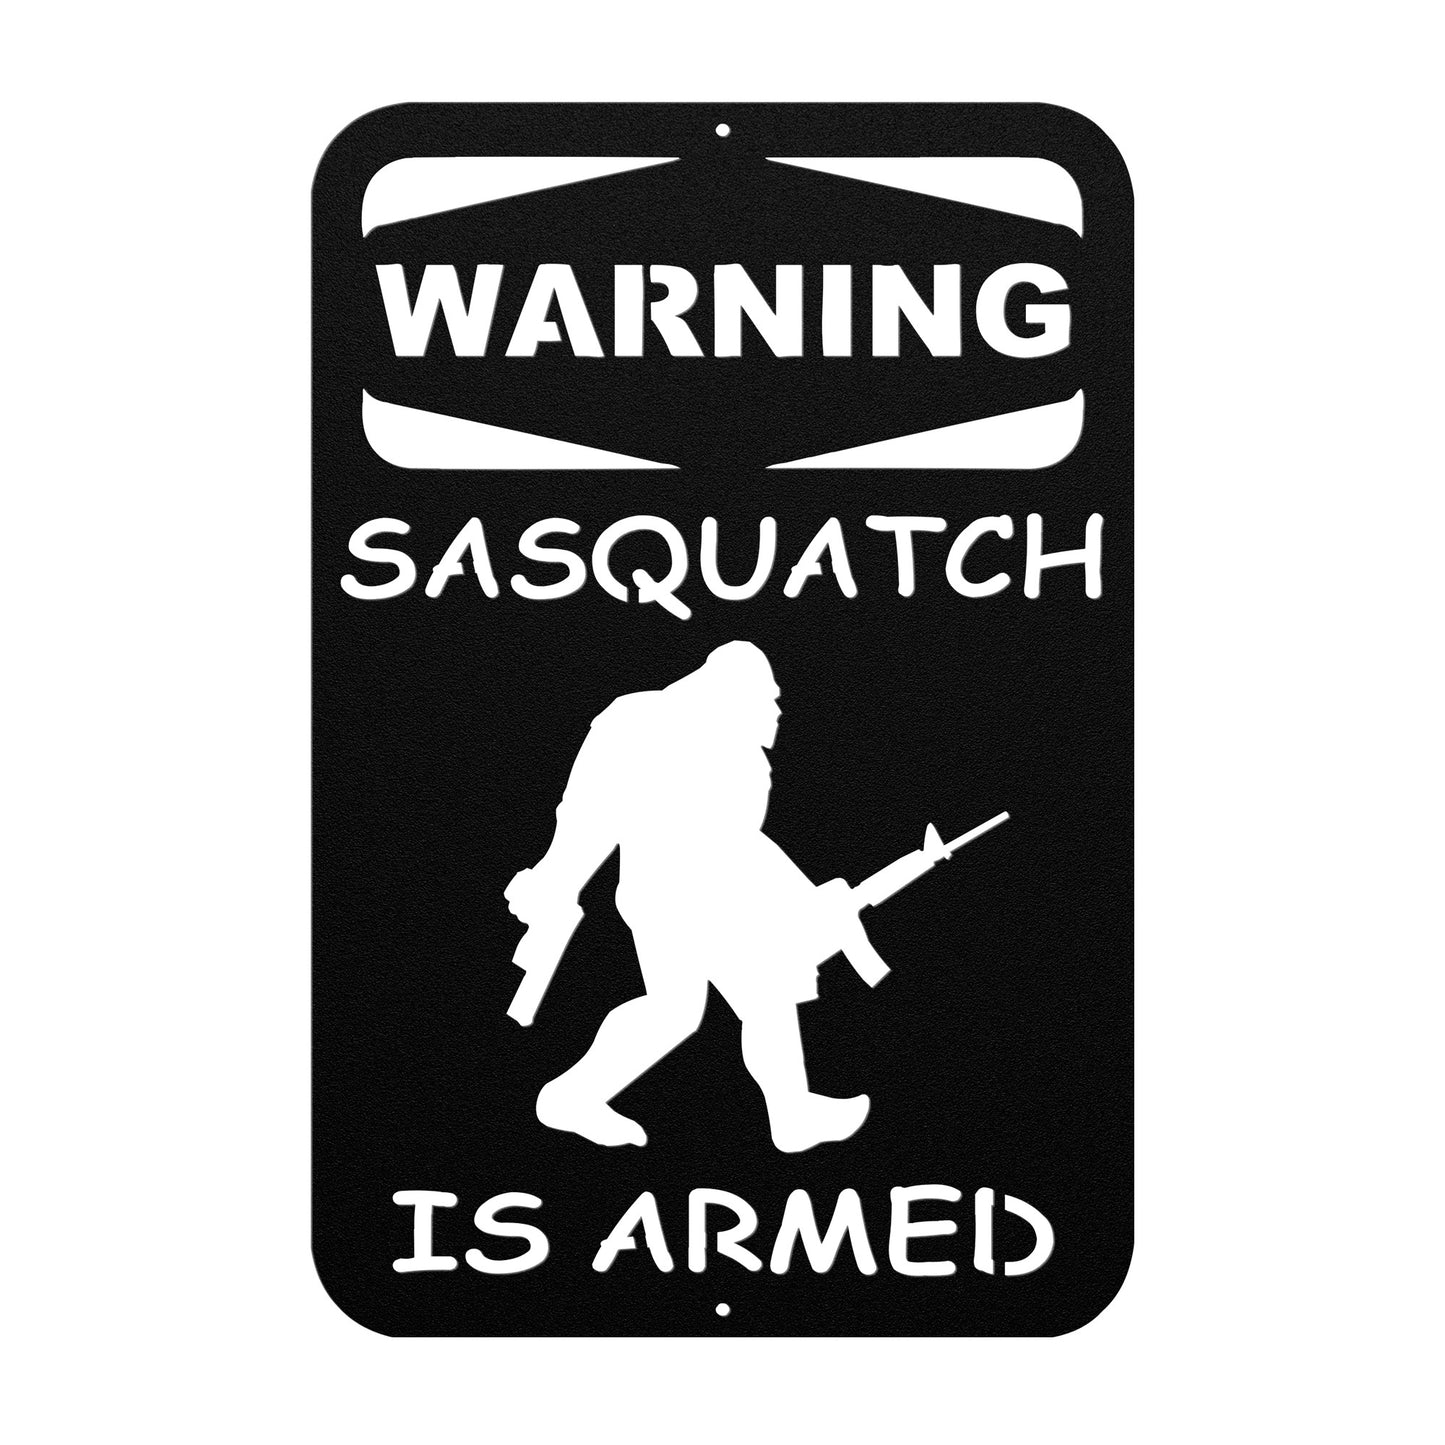 Warning, Sasquatch Is Armed - Metal Art Sign